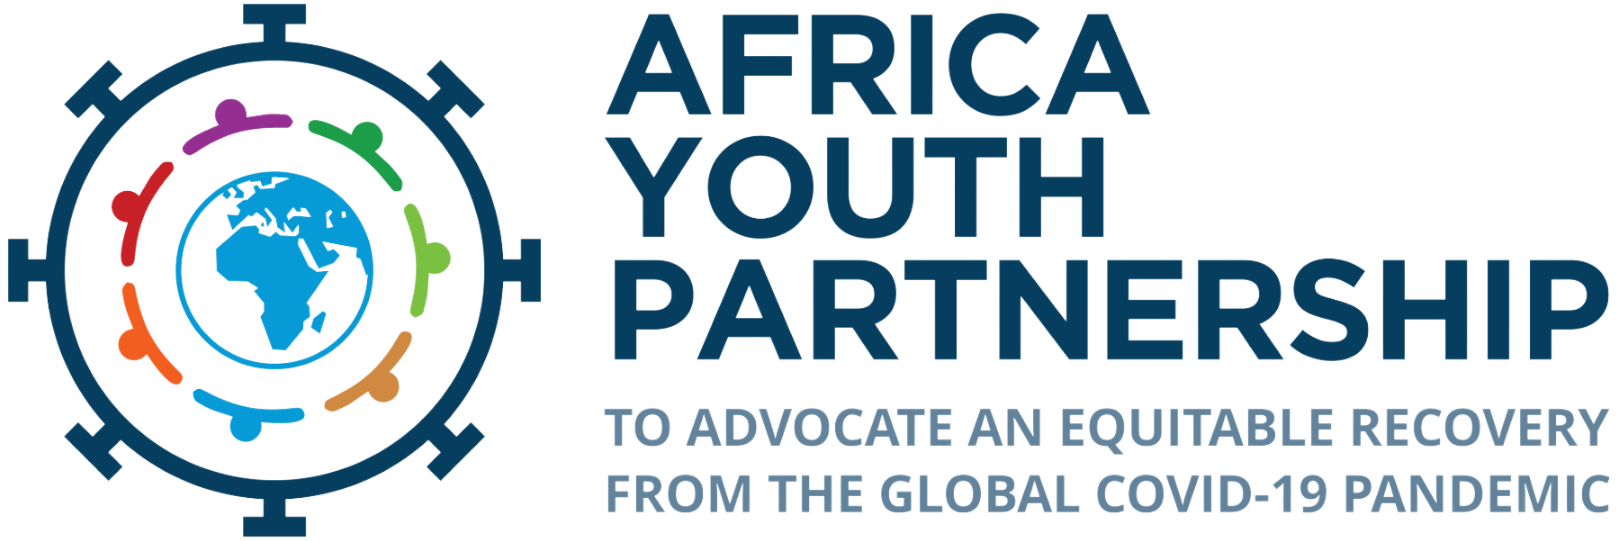 Africa Youth Partnership